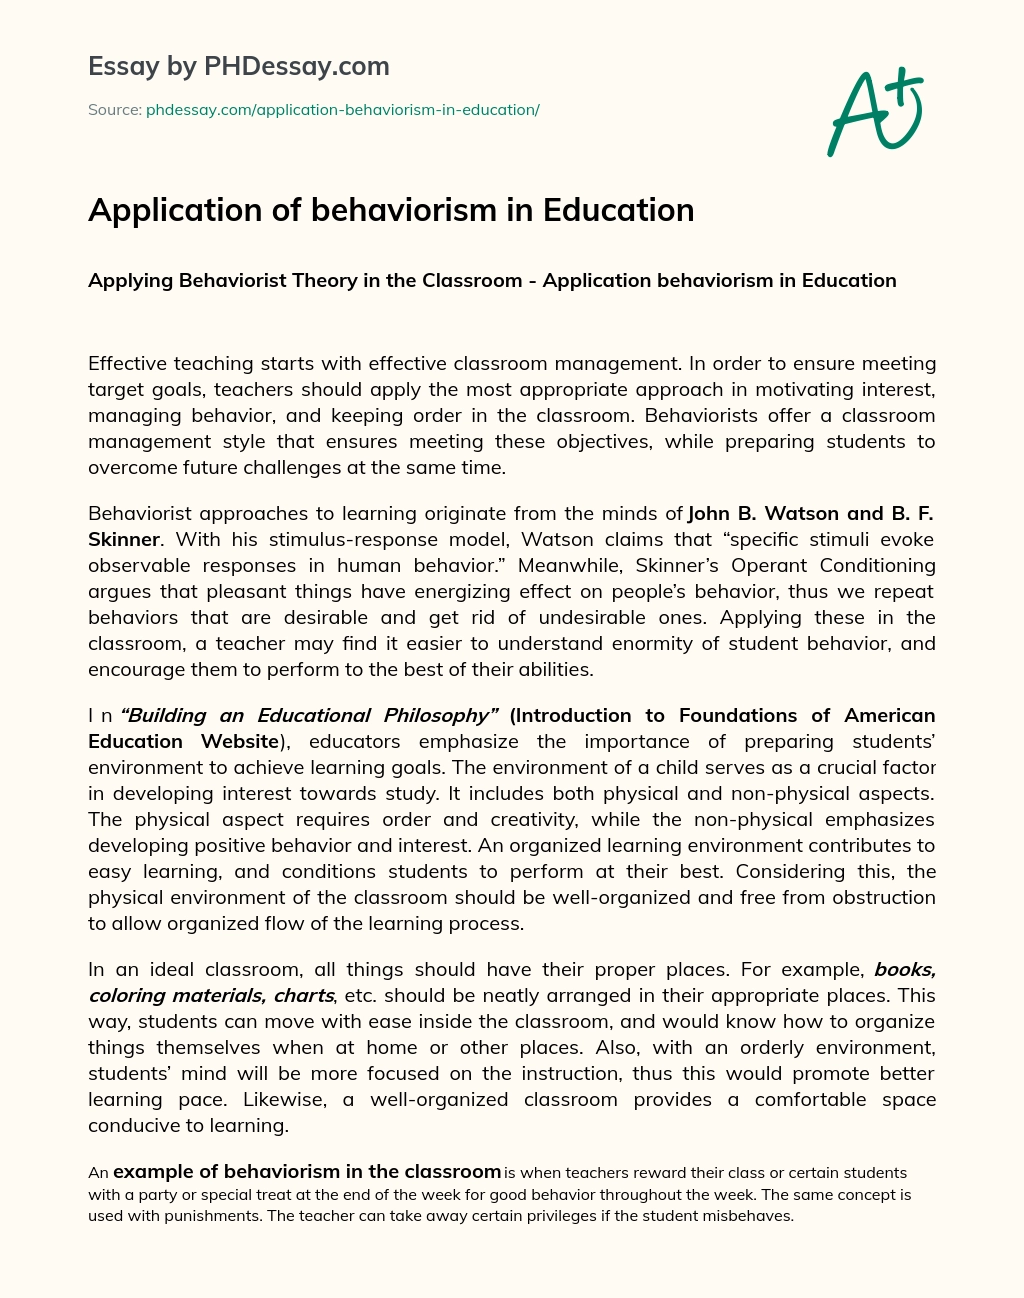 Application of behaviorism in Education essay